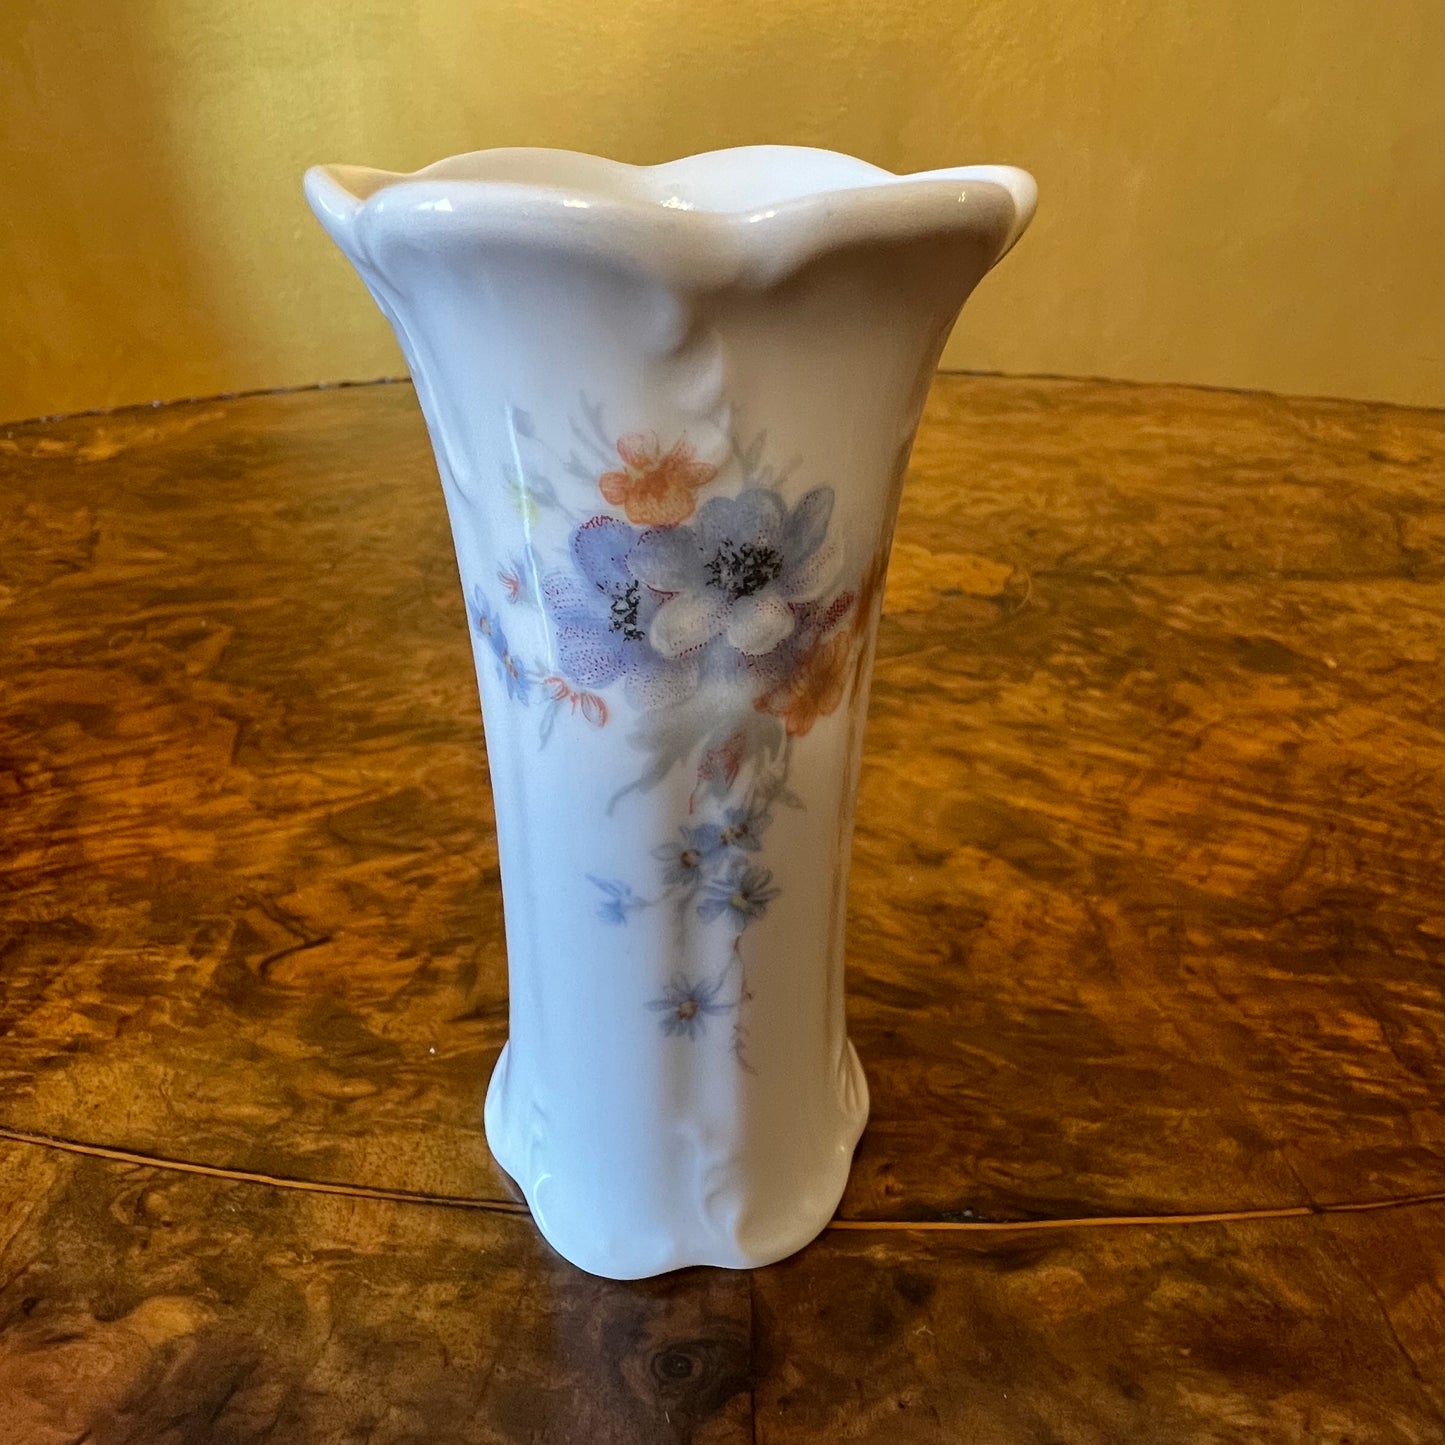 Rosenthal Classic Rose Bud Vase